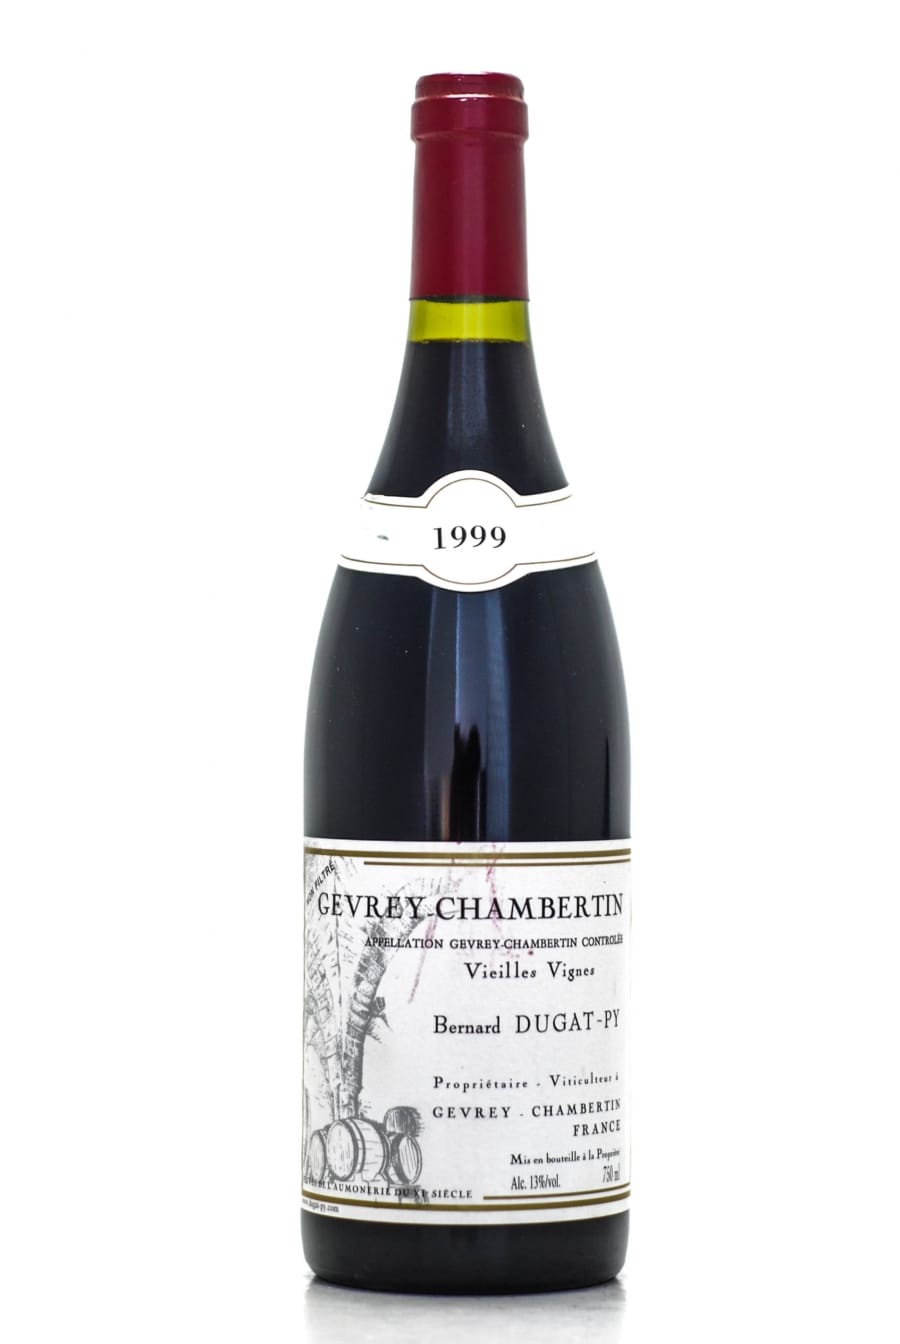 Dugat-Py - Gevrey Chambertin Vieille Vignes 1999 perfect